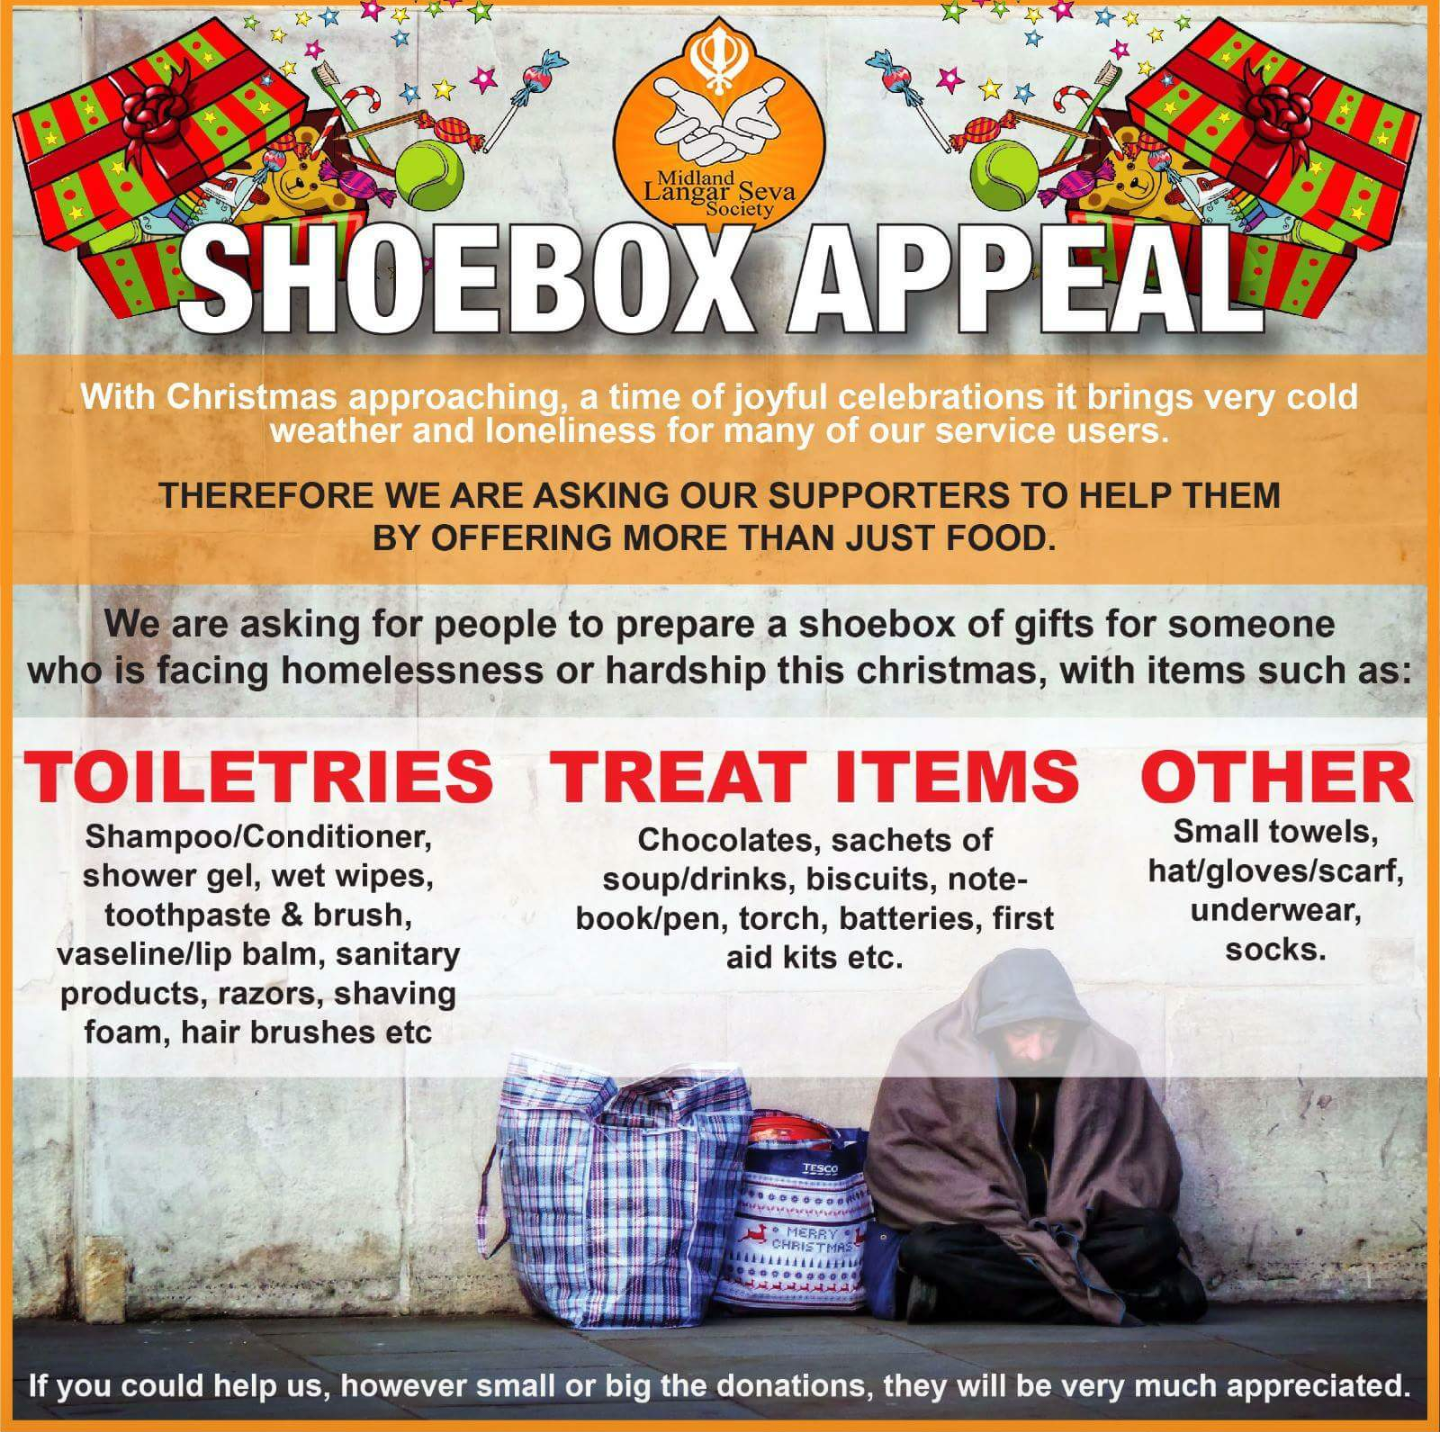 WM: Shoebox Appeal for the Homeless